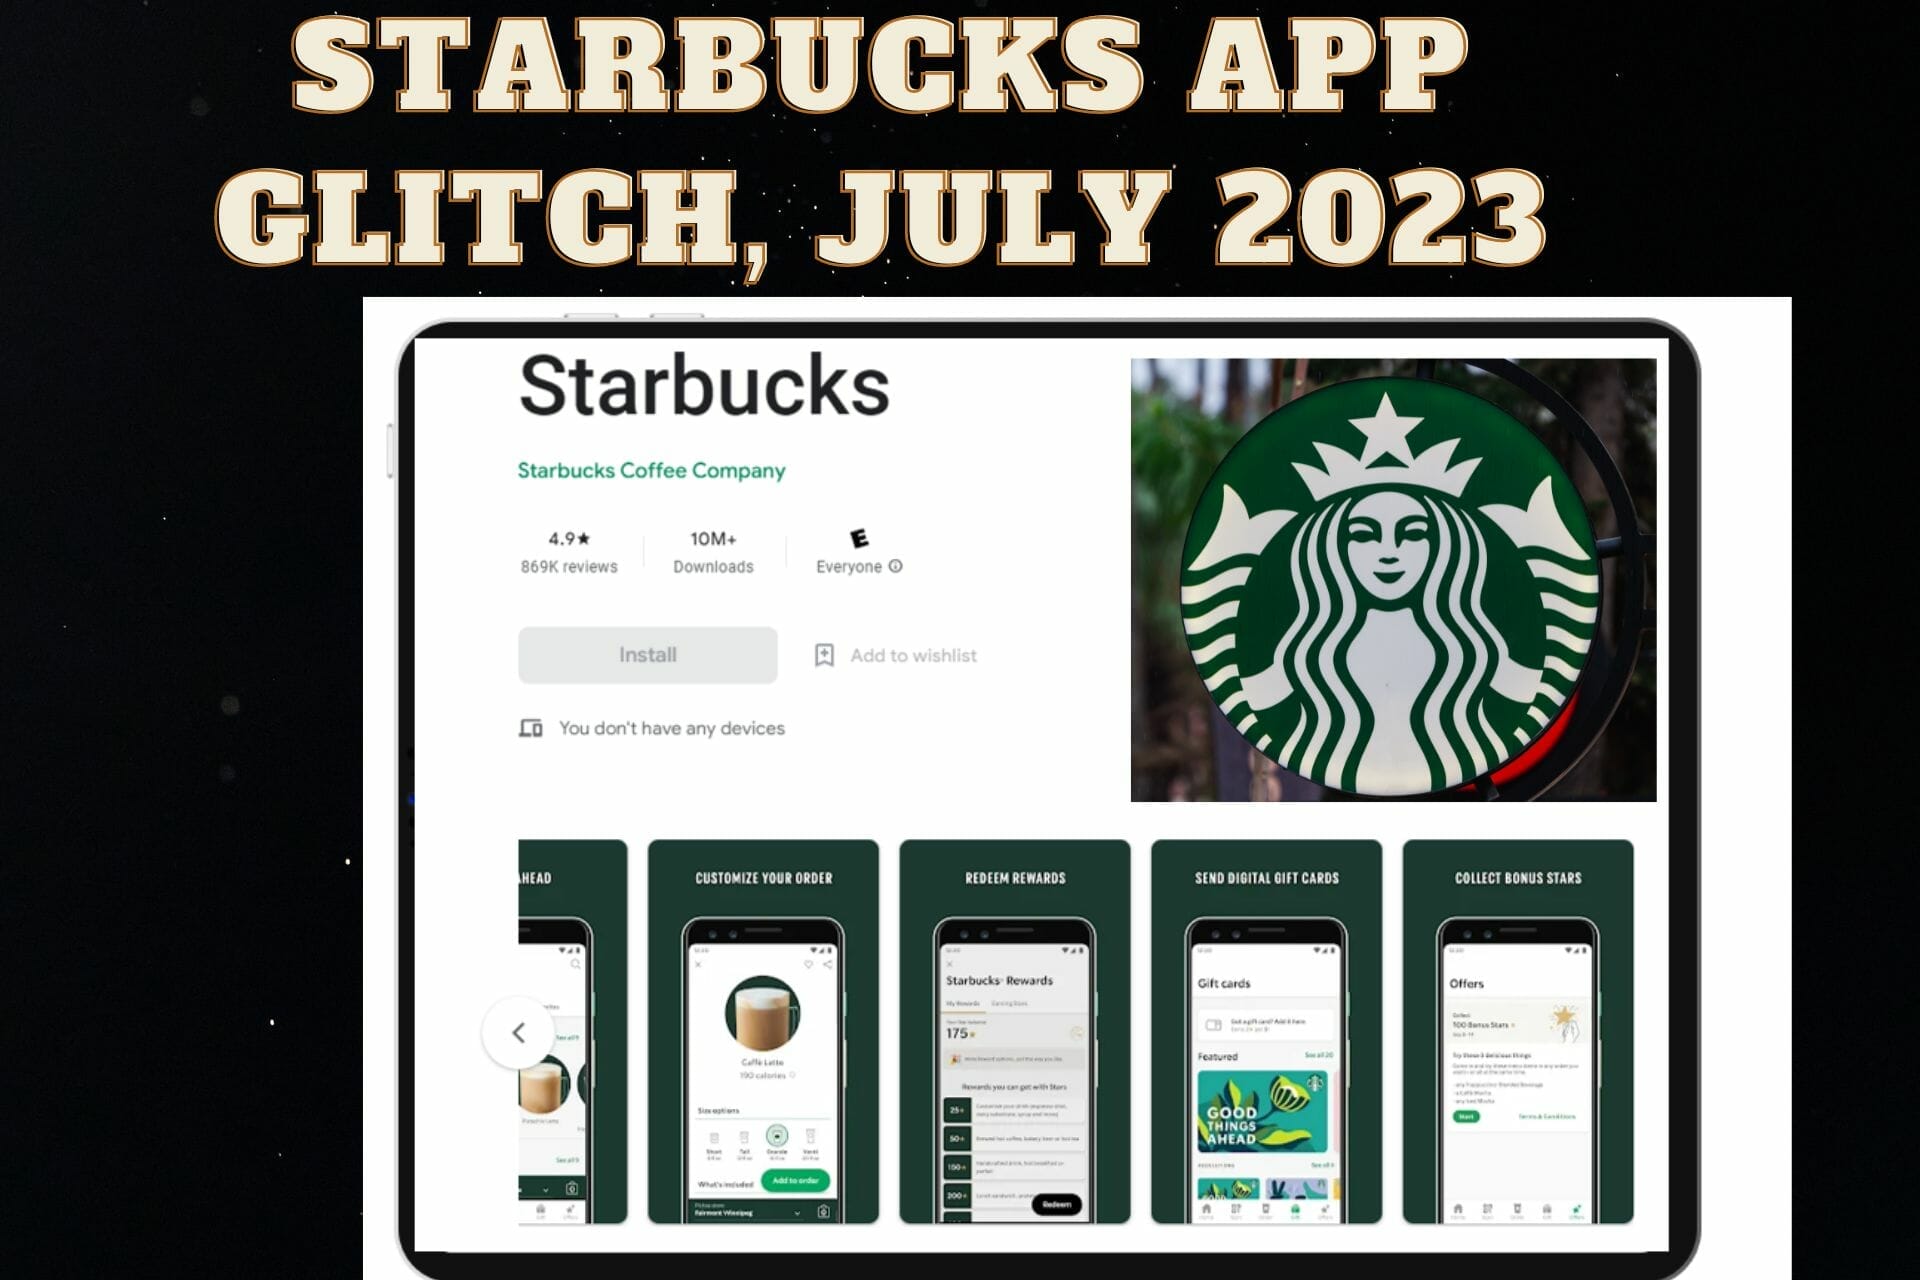 Starbucks App Glitch July 2023